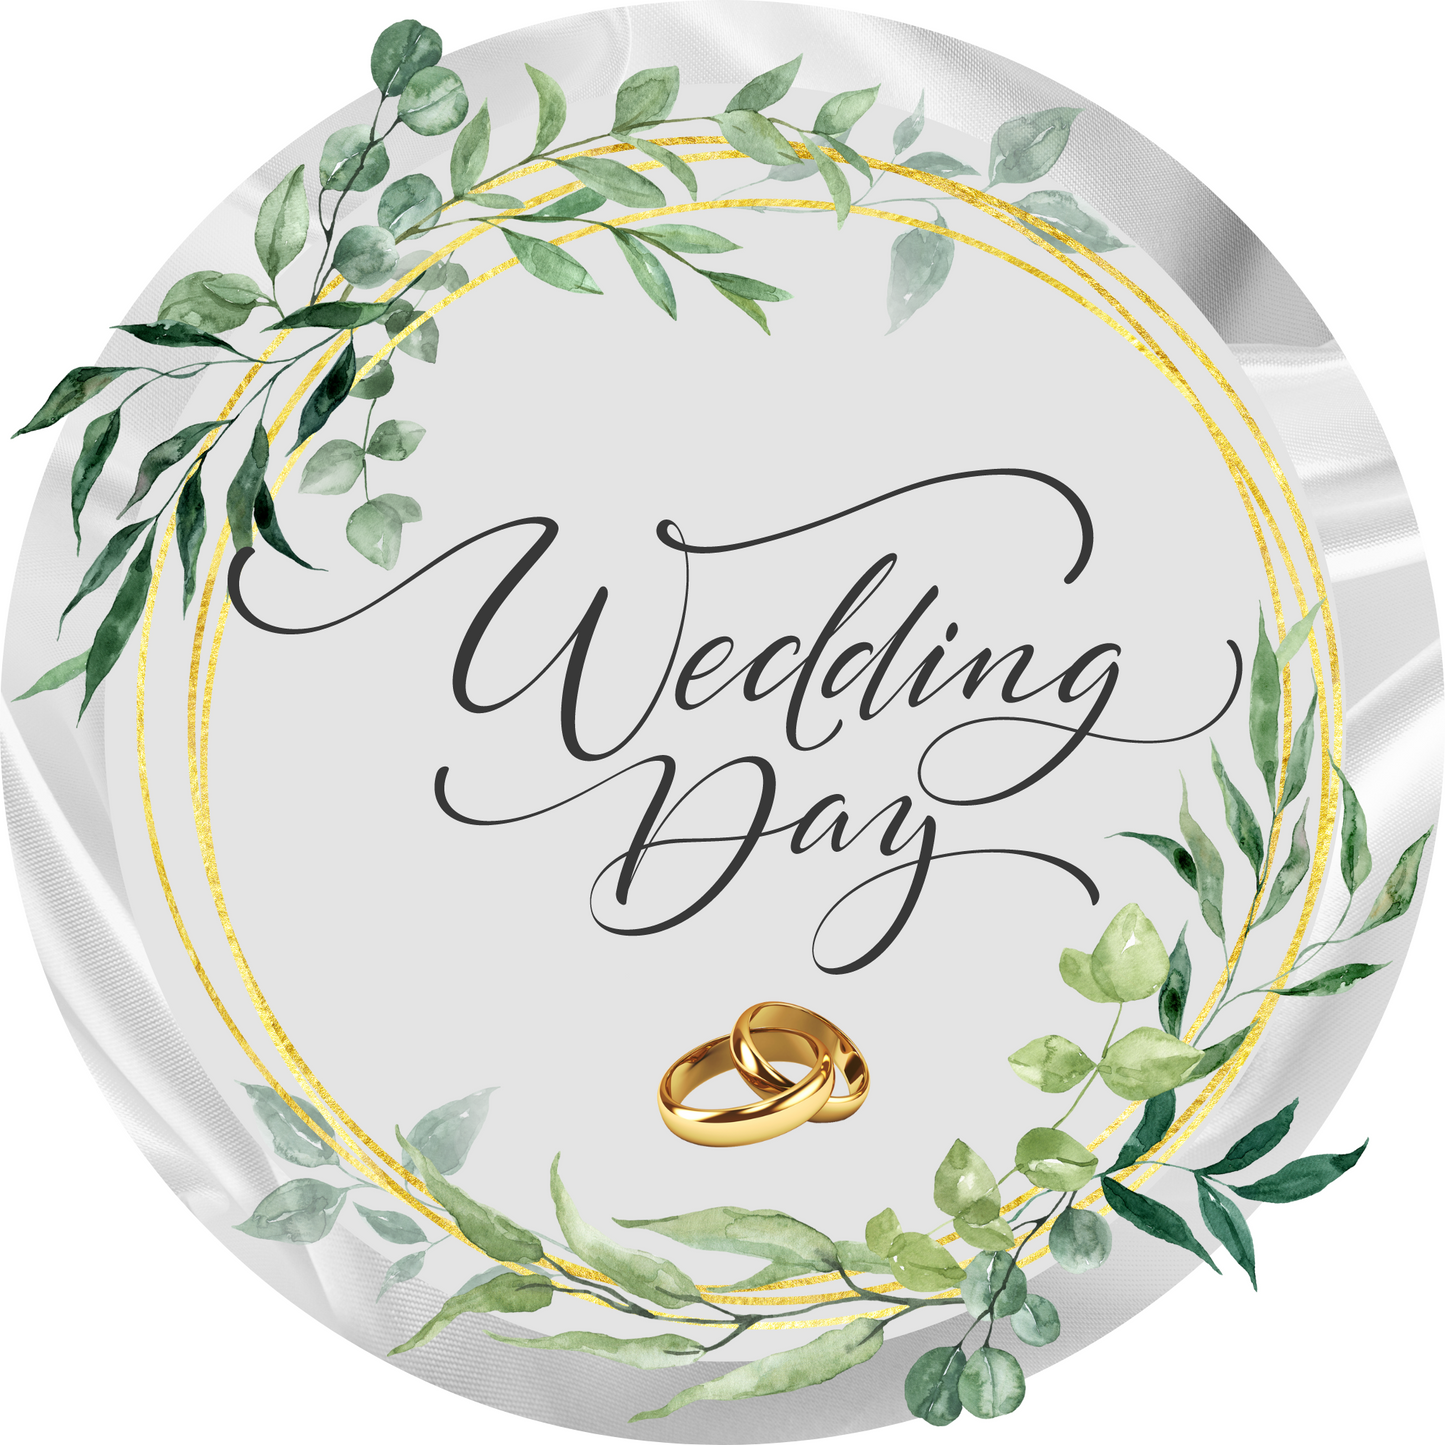 Wedding Day Ring Round Sign